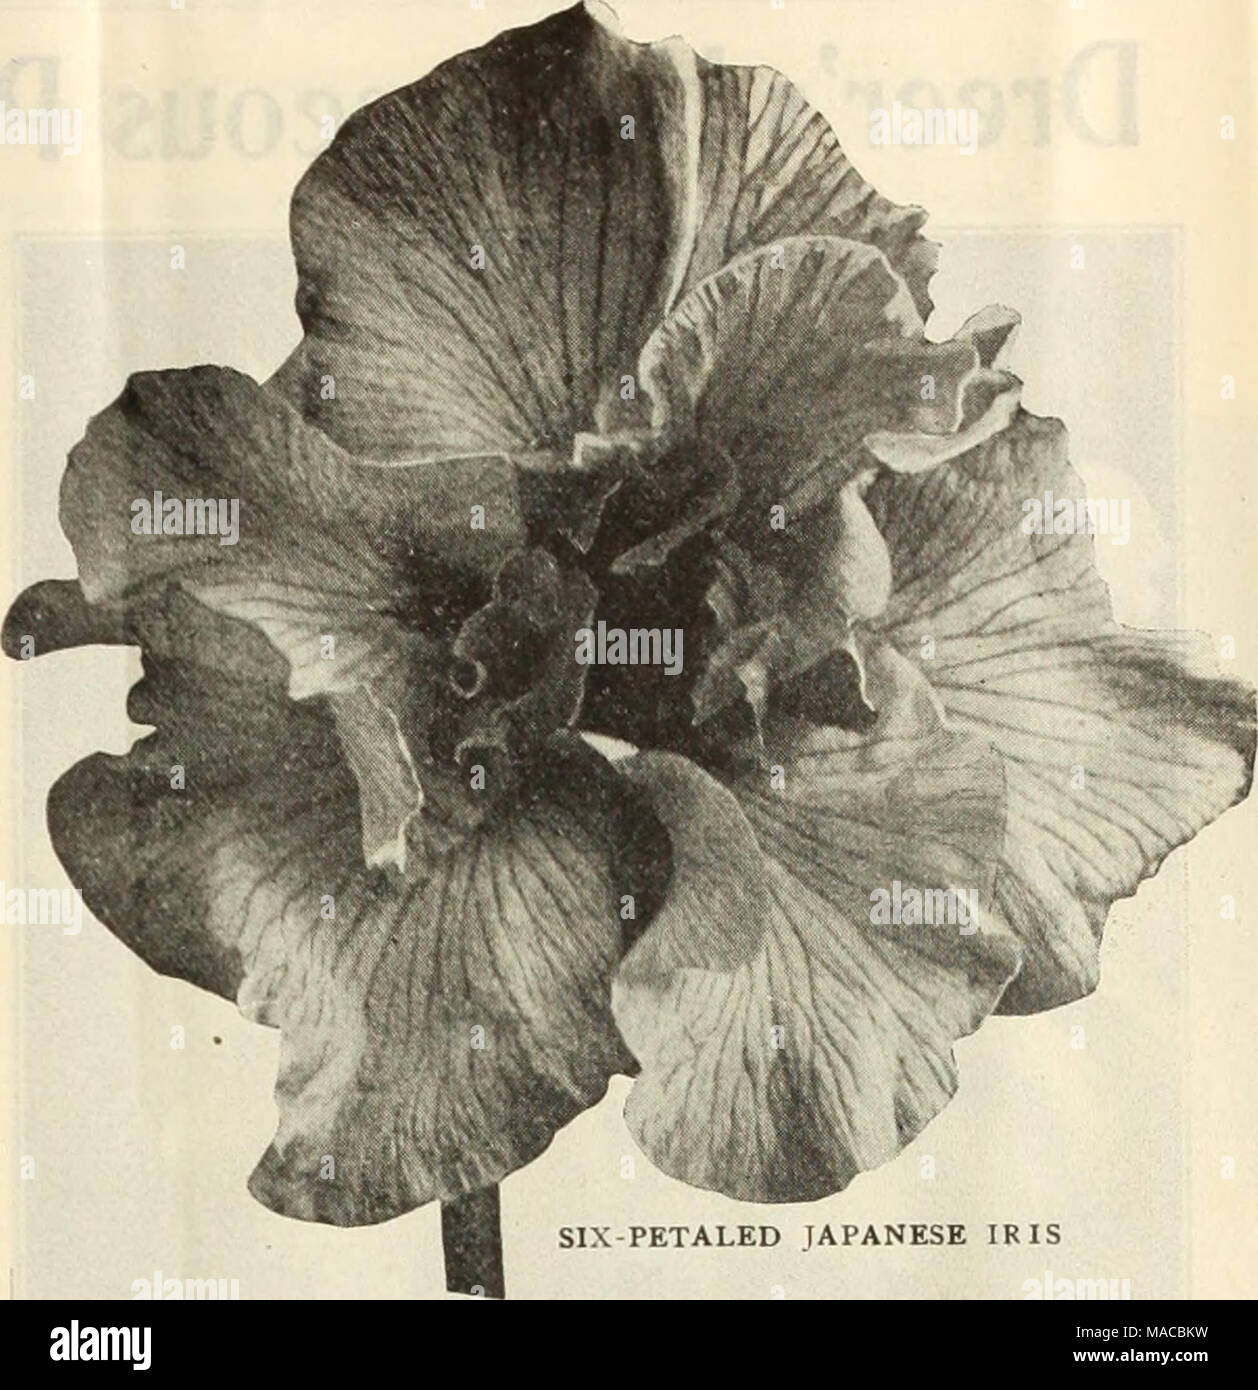 . Dreer's wholesale price list : bulbs for florists plants for florists flower seeds for florists fungicides, fertilizers, insecticides, implements, etc . Mertensia (Blue Bells). Vlrginica. 3-inch pots 1 25 Monarda (Horse Mint). DIdyma. 4-inch pots 85 Rosea. 4-inch pots 85 Splendens. 4-inch pots 85 Cambridge Scarlet. 4-inch pots . 85 Violacea (New). 4-inch pots 85 Fistulosa Alba. 4-inch pots 85 Nierembergia (Cup .'^lower). Rivularis. 3-inch pots... 1 25 Orobus (Bitter Vetch). Vernus. 3-inch pots 1 50 Lathyroides. 3-inch pots 1 50 00 6 00 6 00 6 00 6 00 6 DO 6 00 8 00 10 00 10 00 SIX-PETALED JA Stock Photo